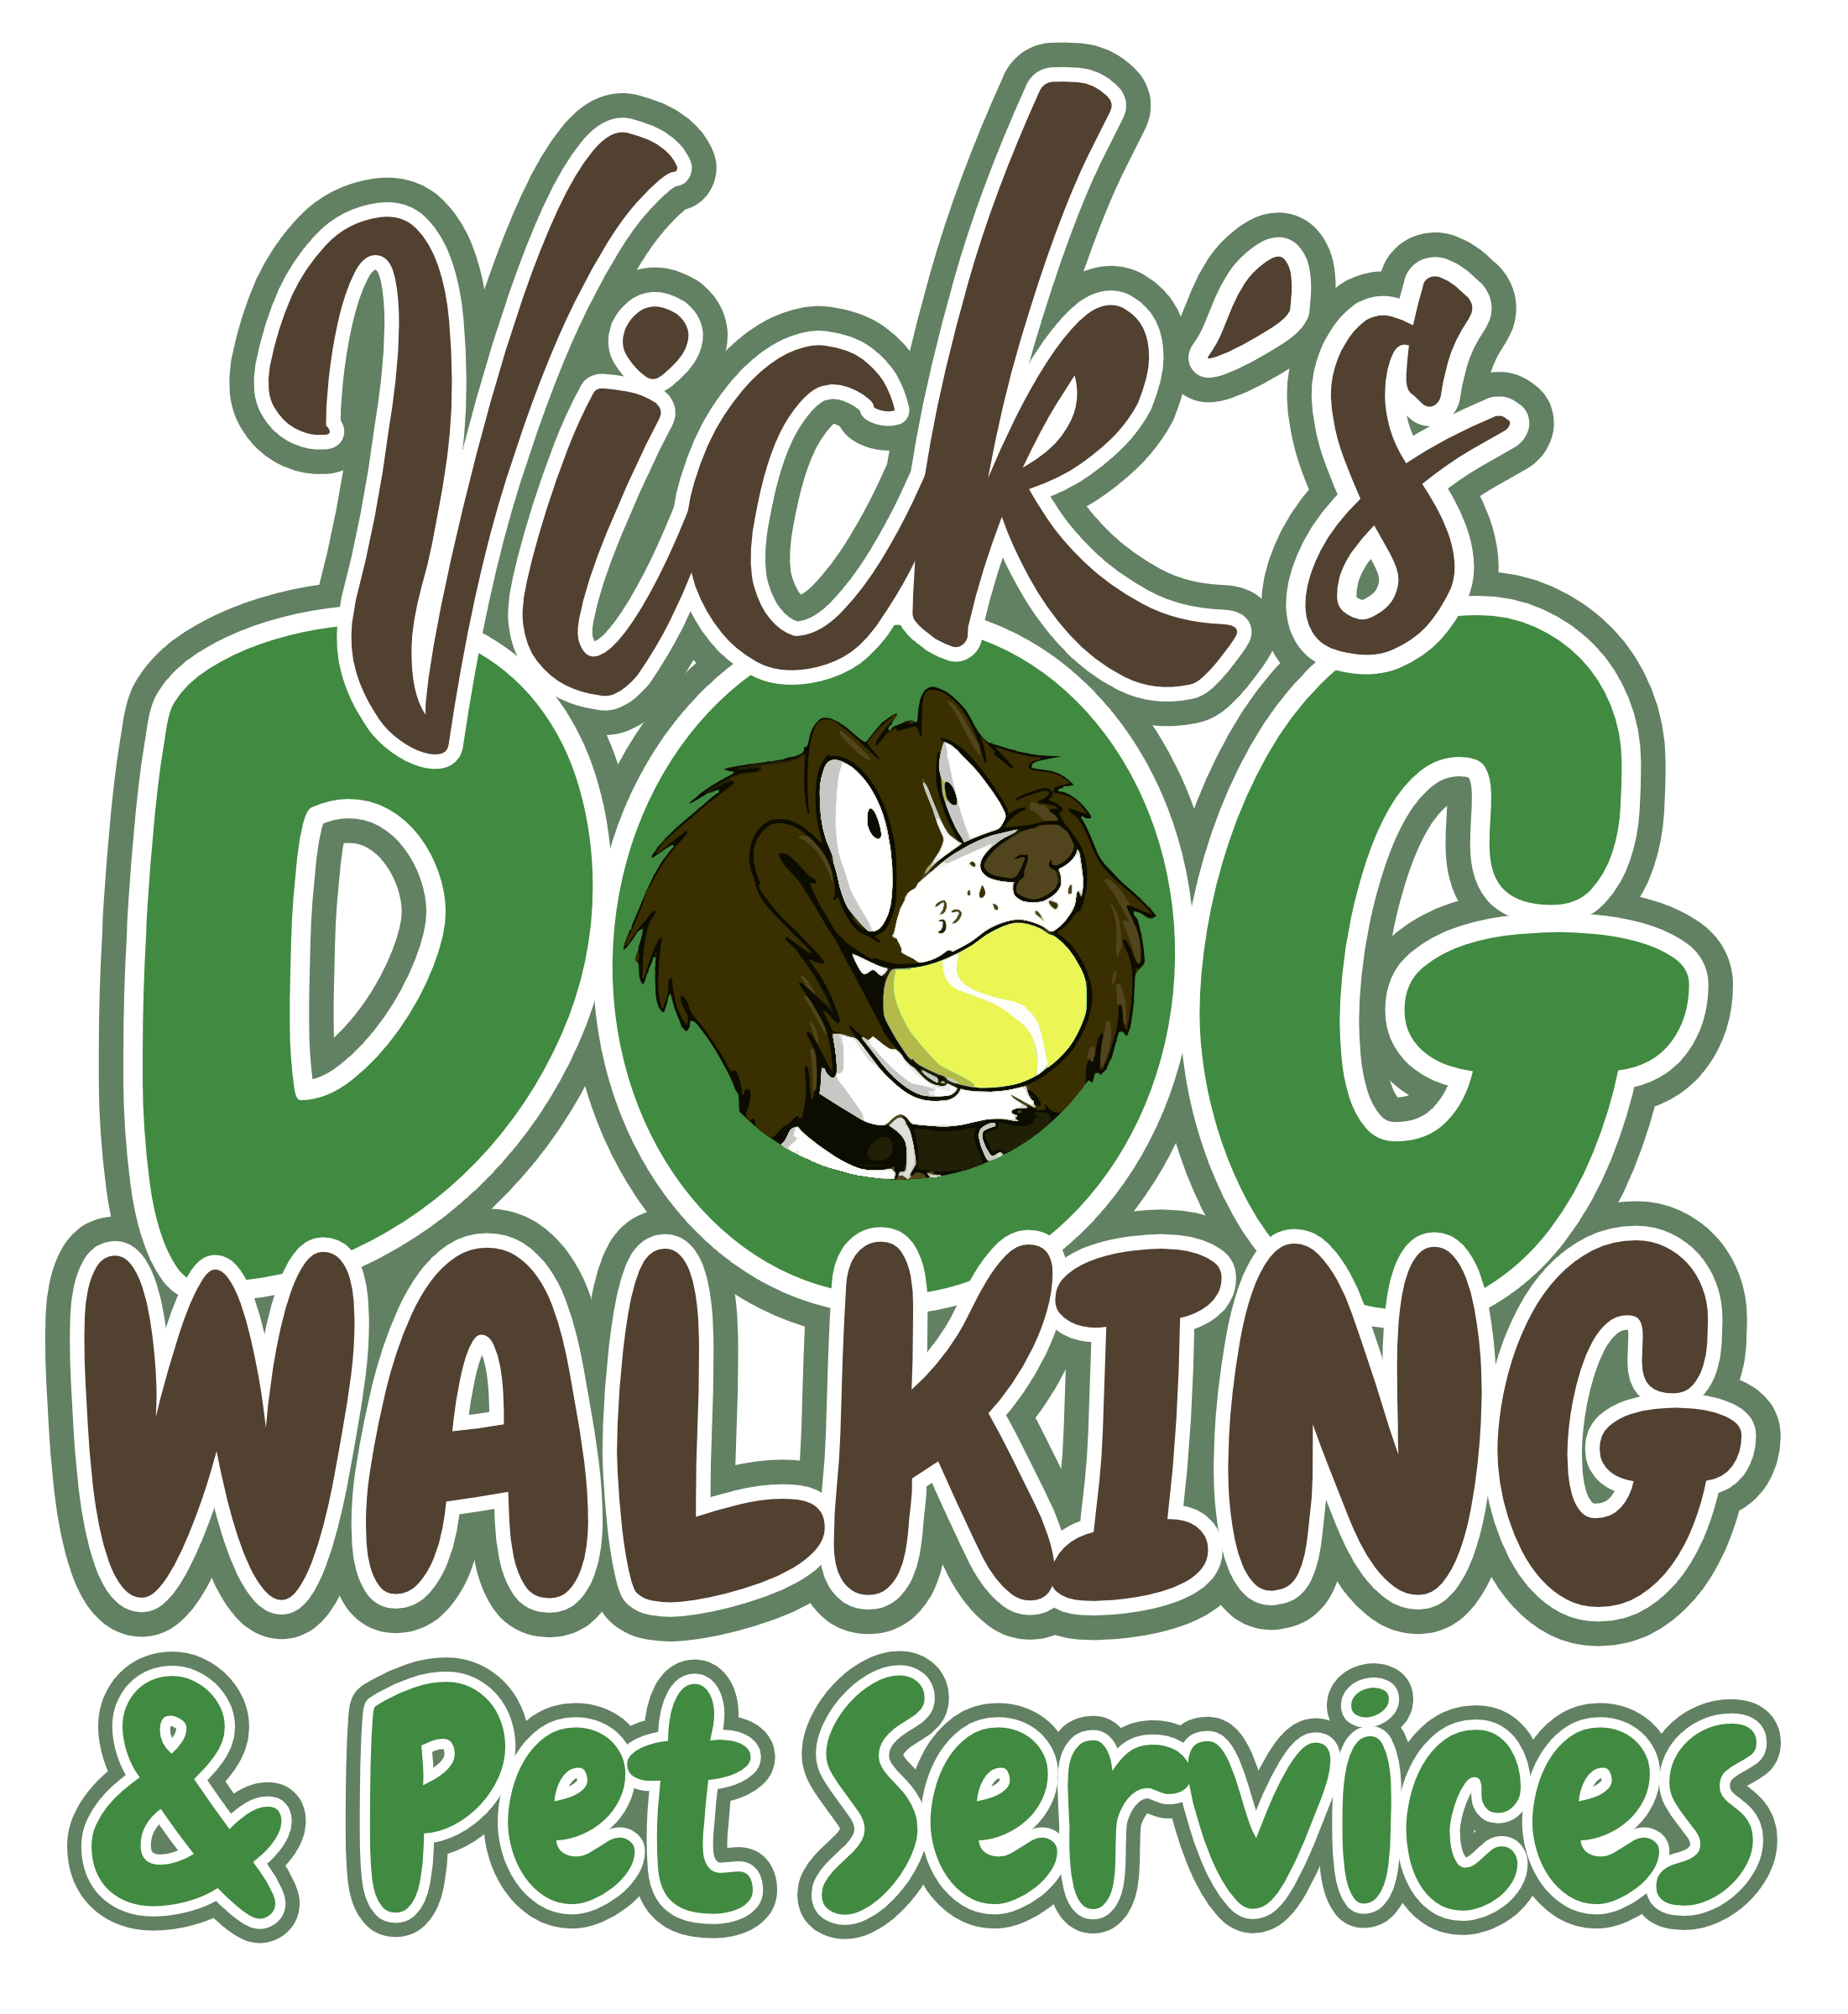 Vick's Dog Walking Services